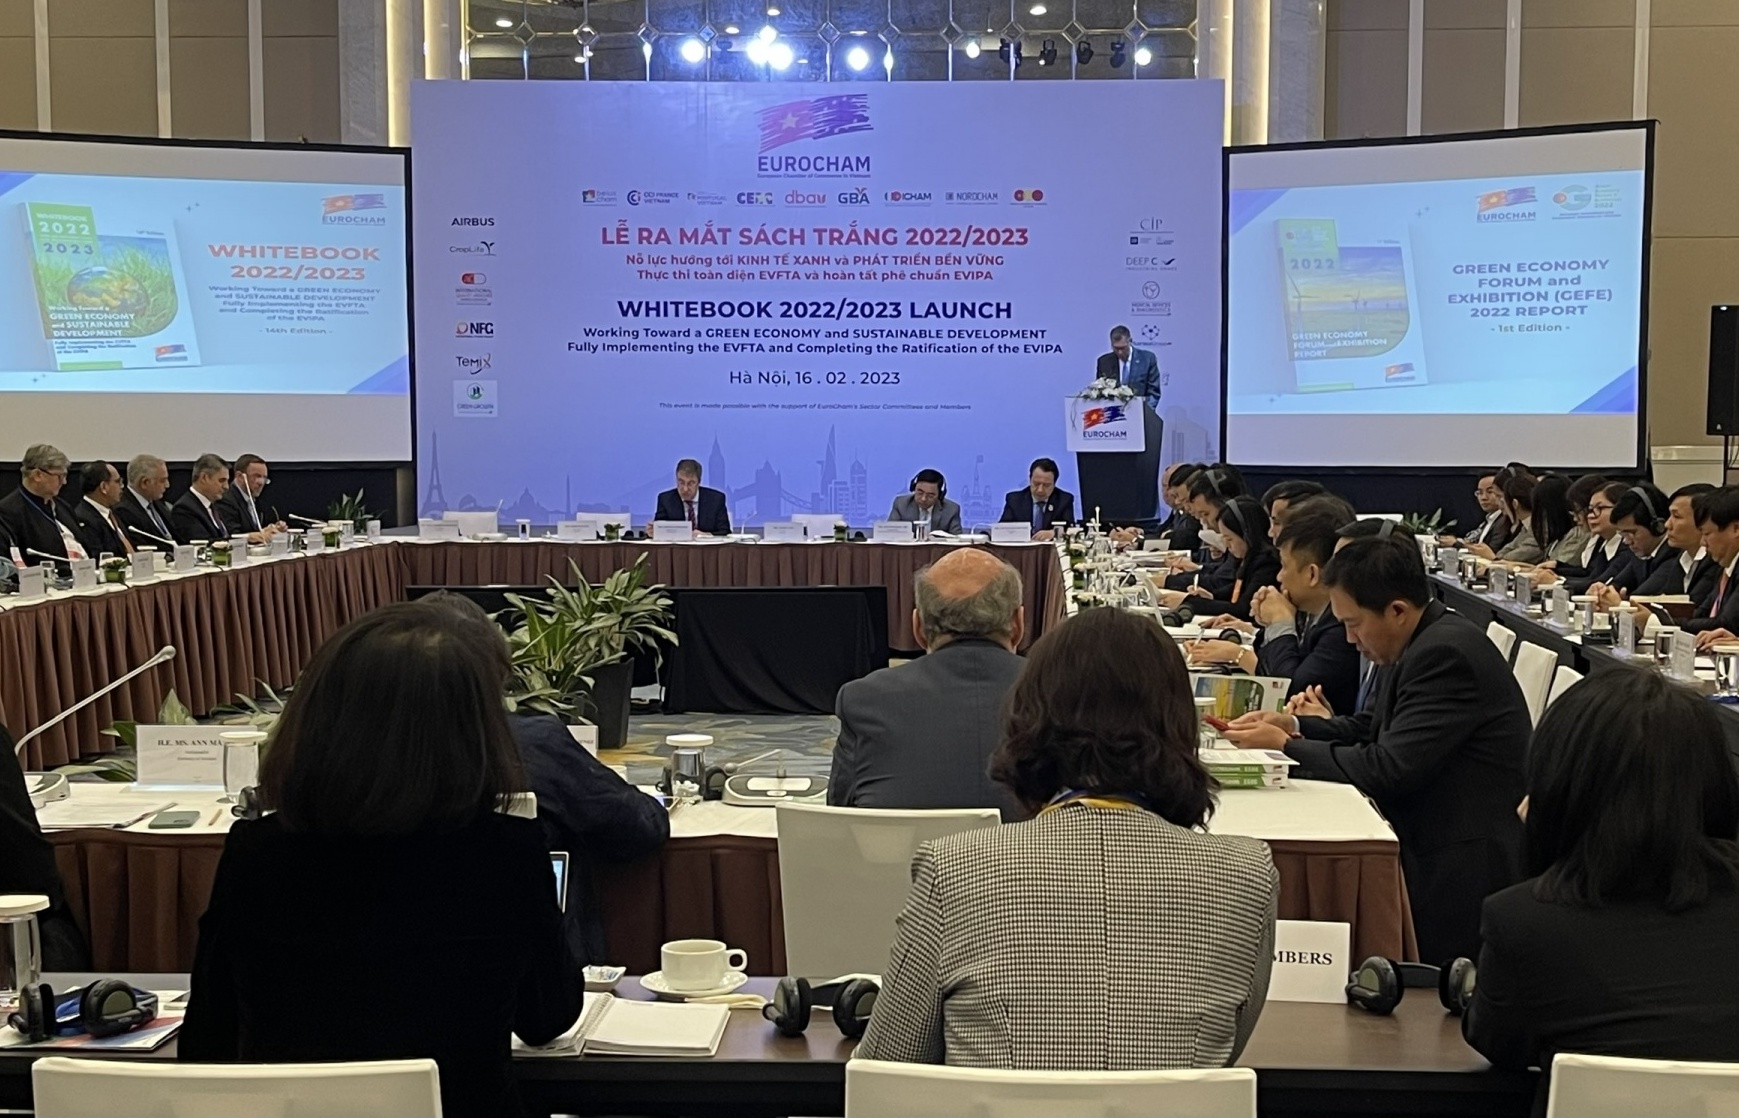 EuroCham launches 2023 Whitebook in Hanoi